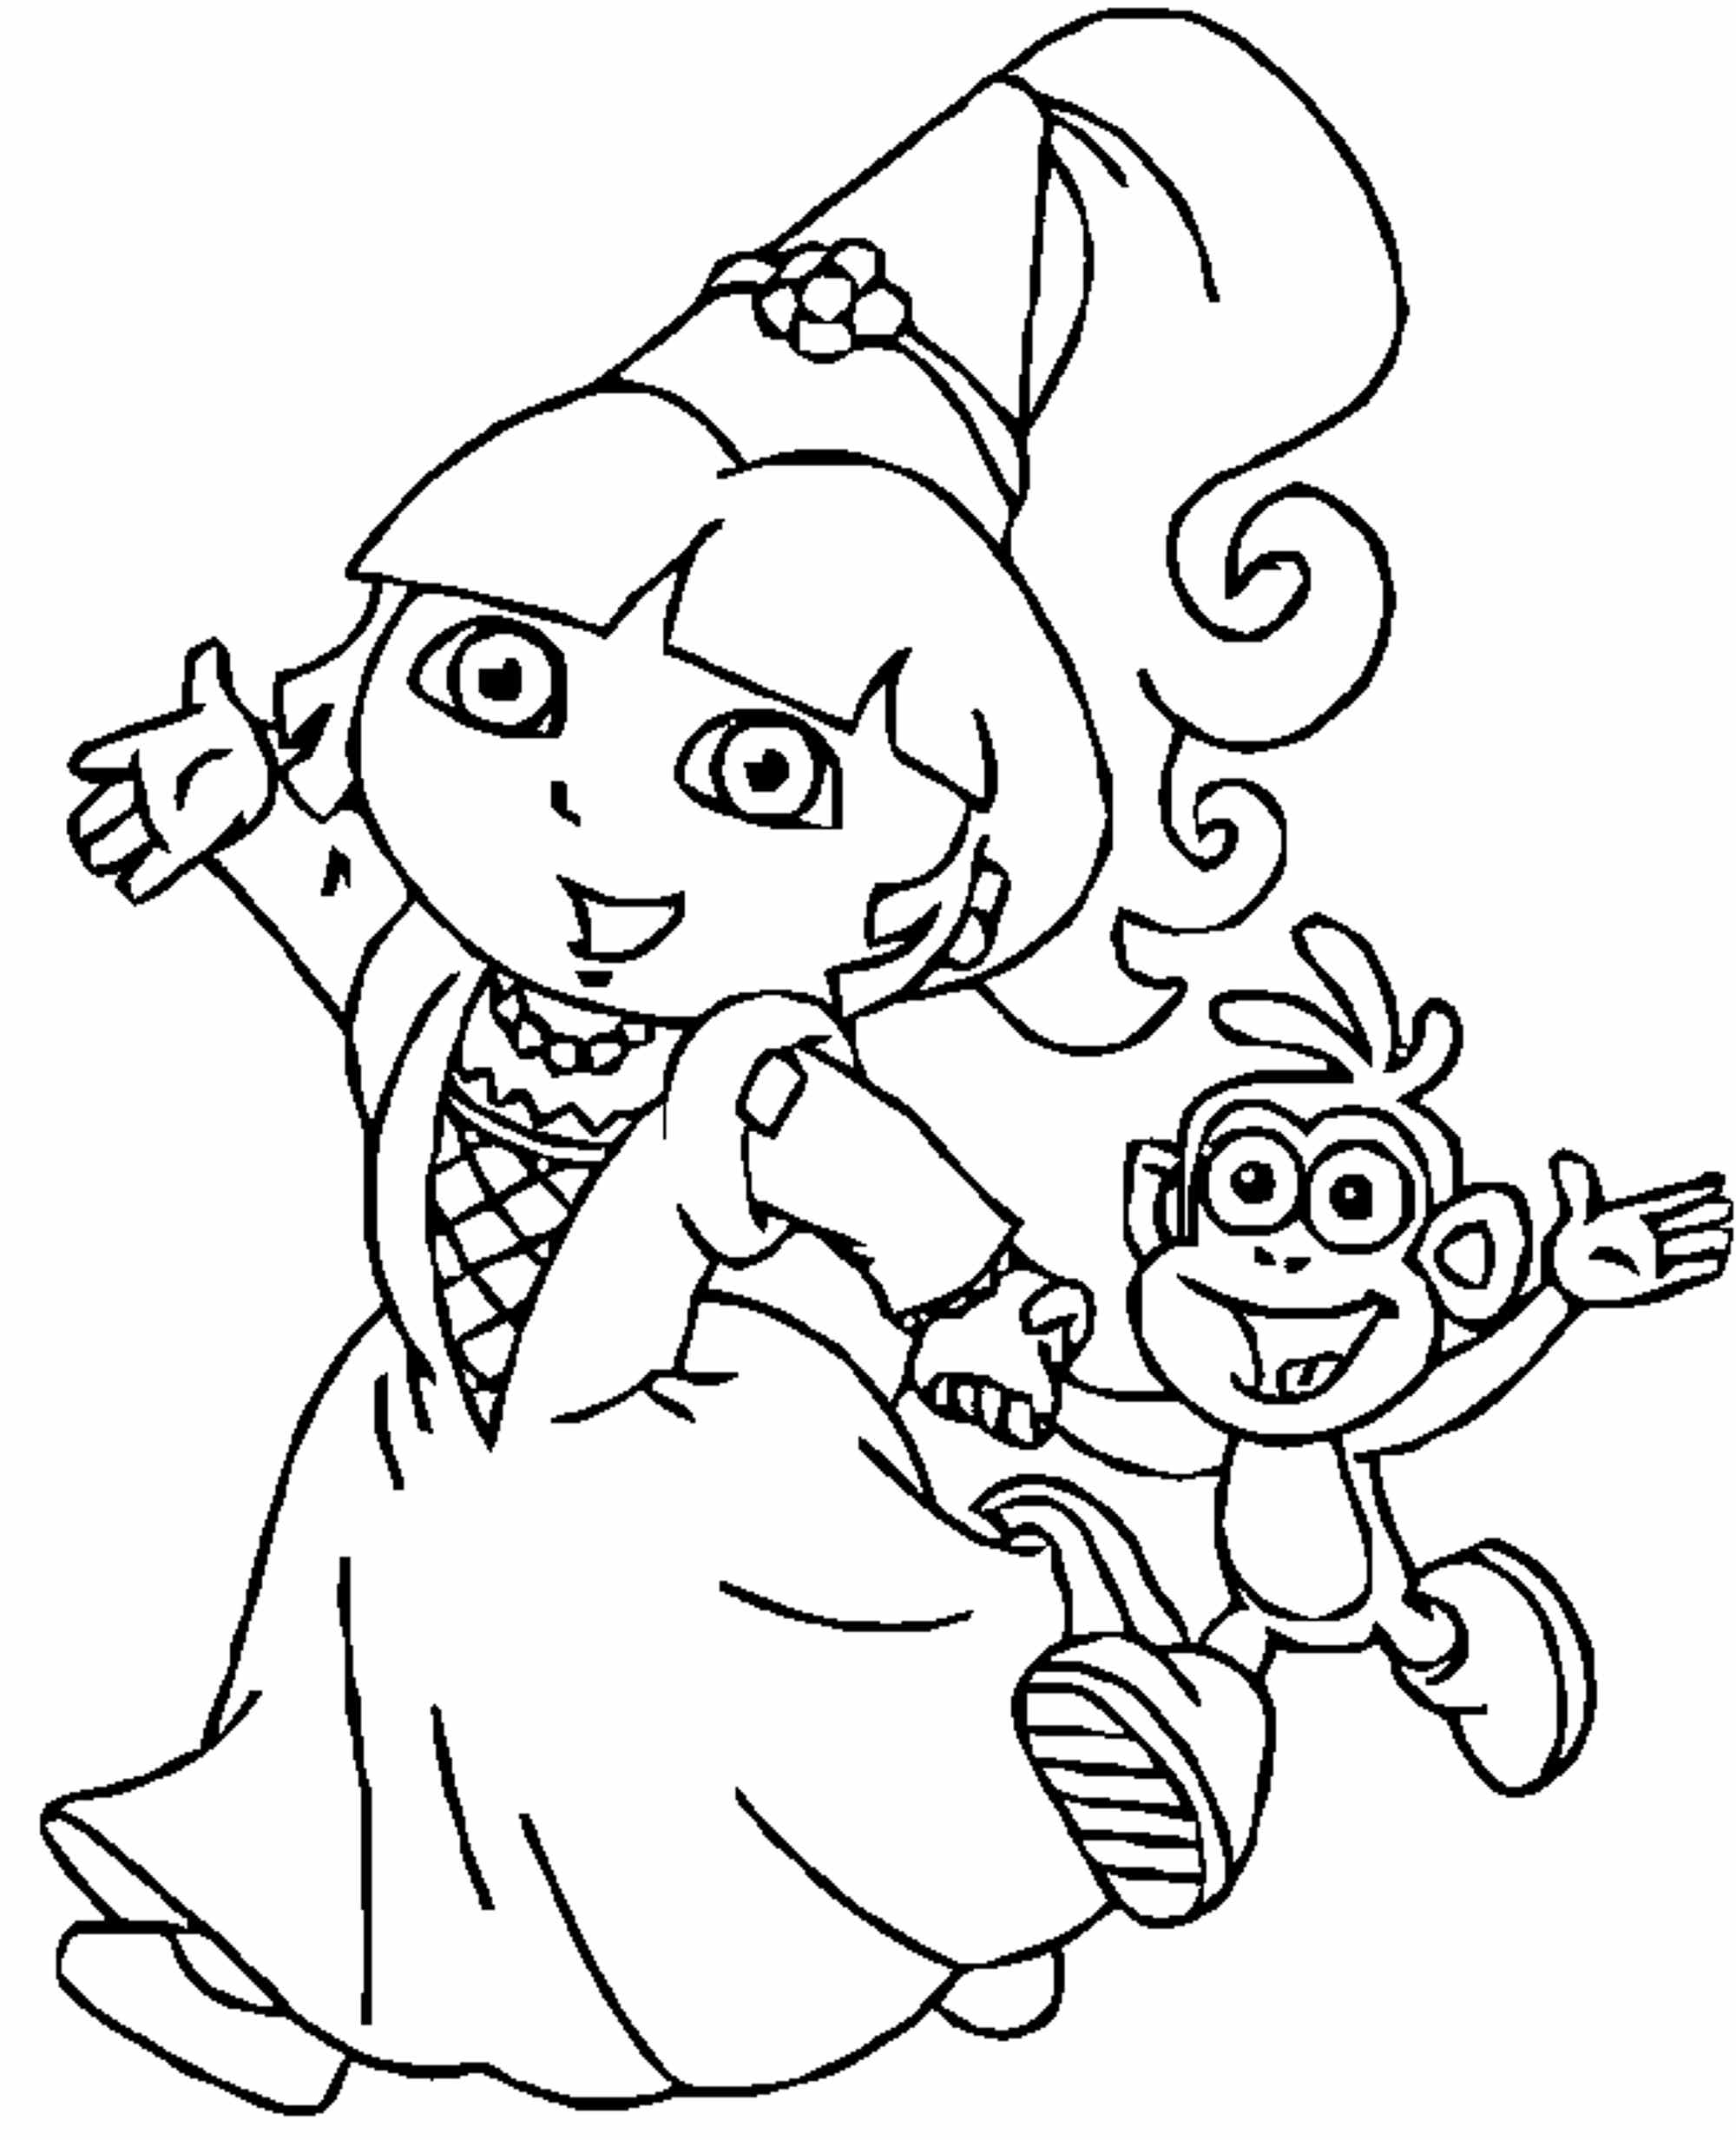 dora-princess-coloring-pages | | BestAppsForKids.com